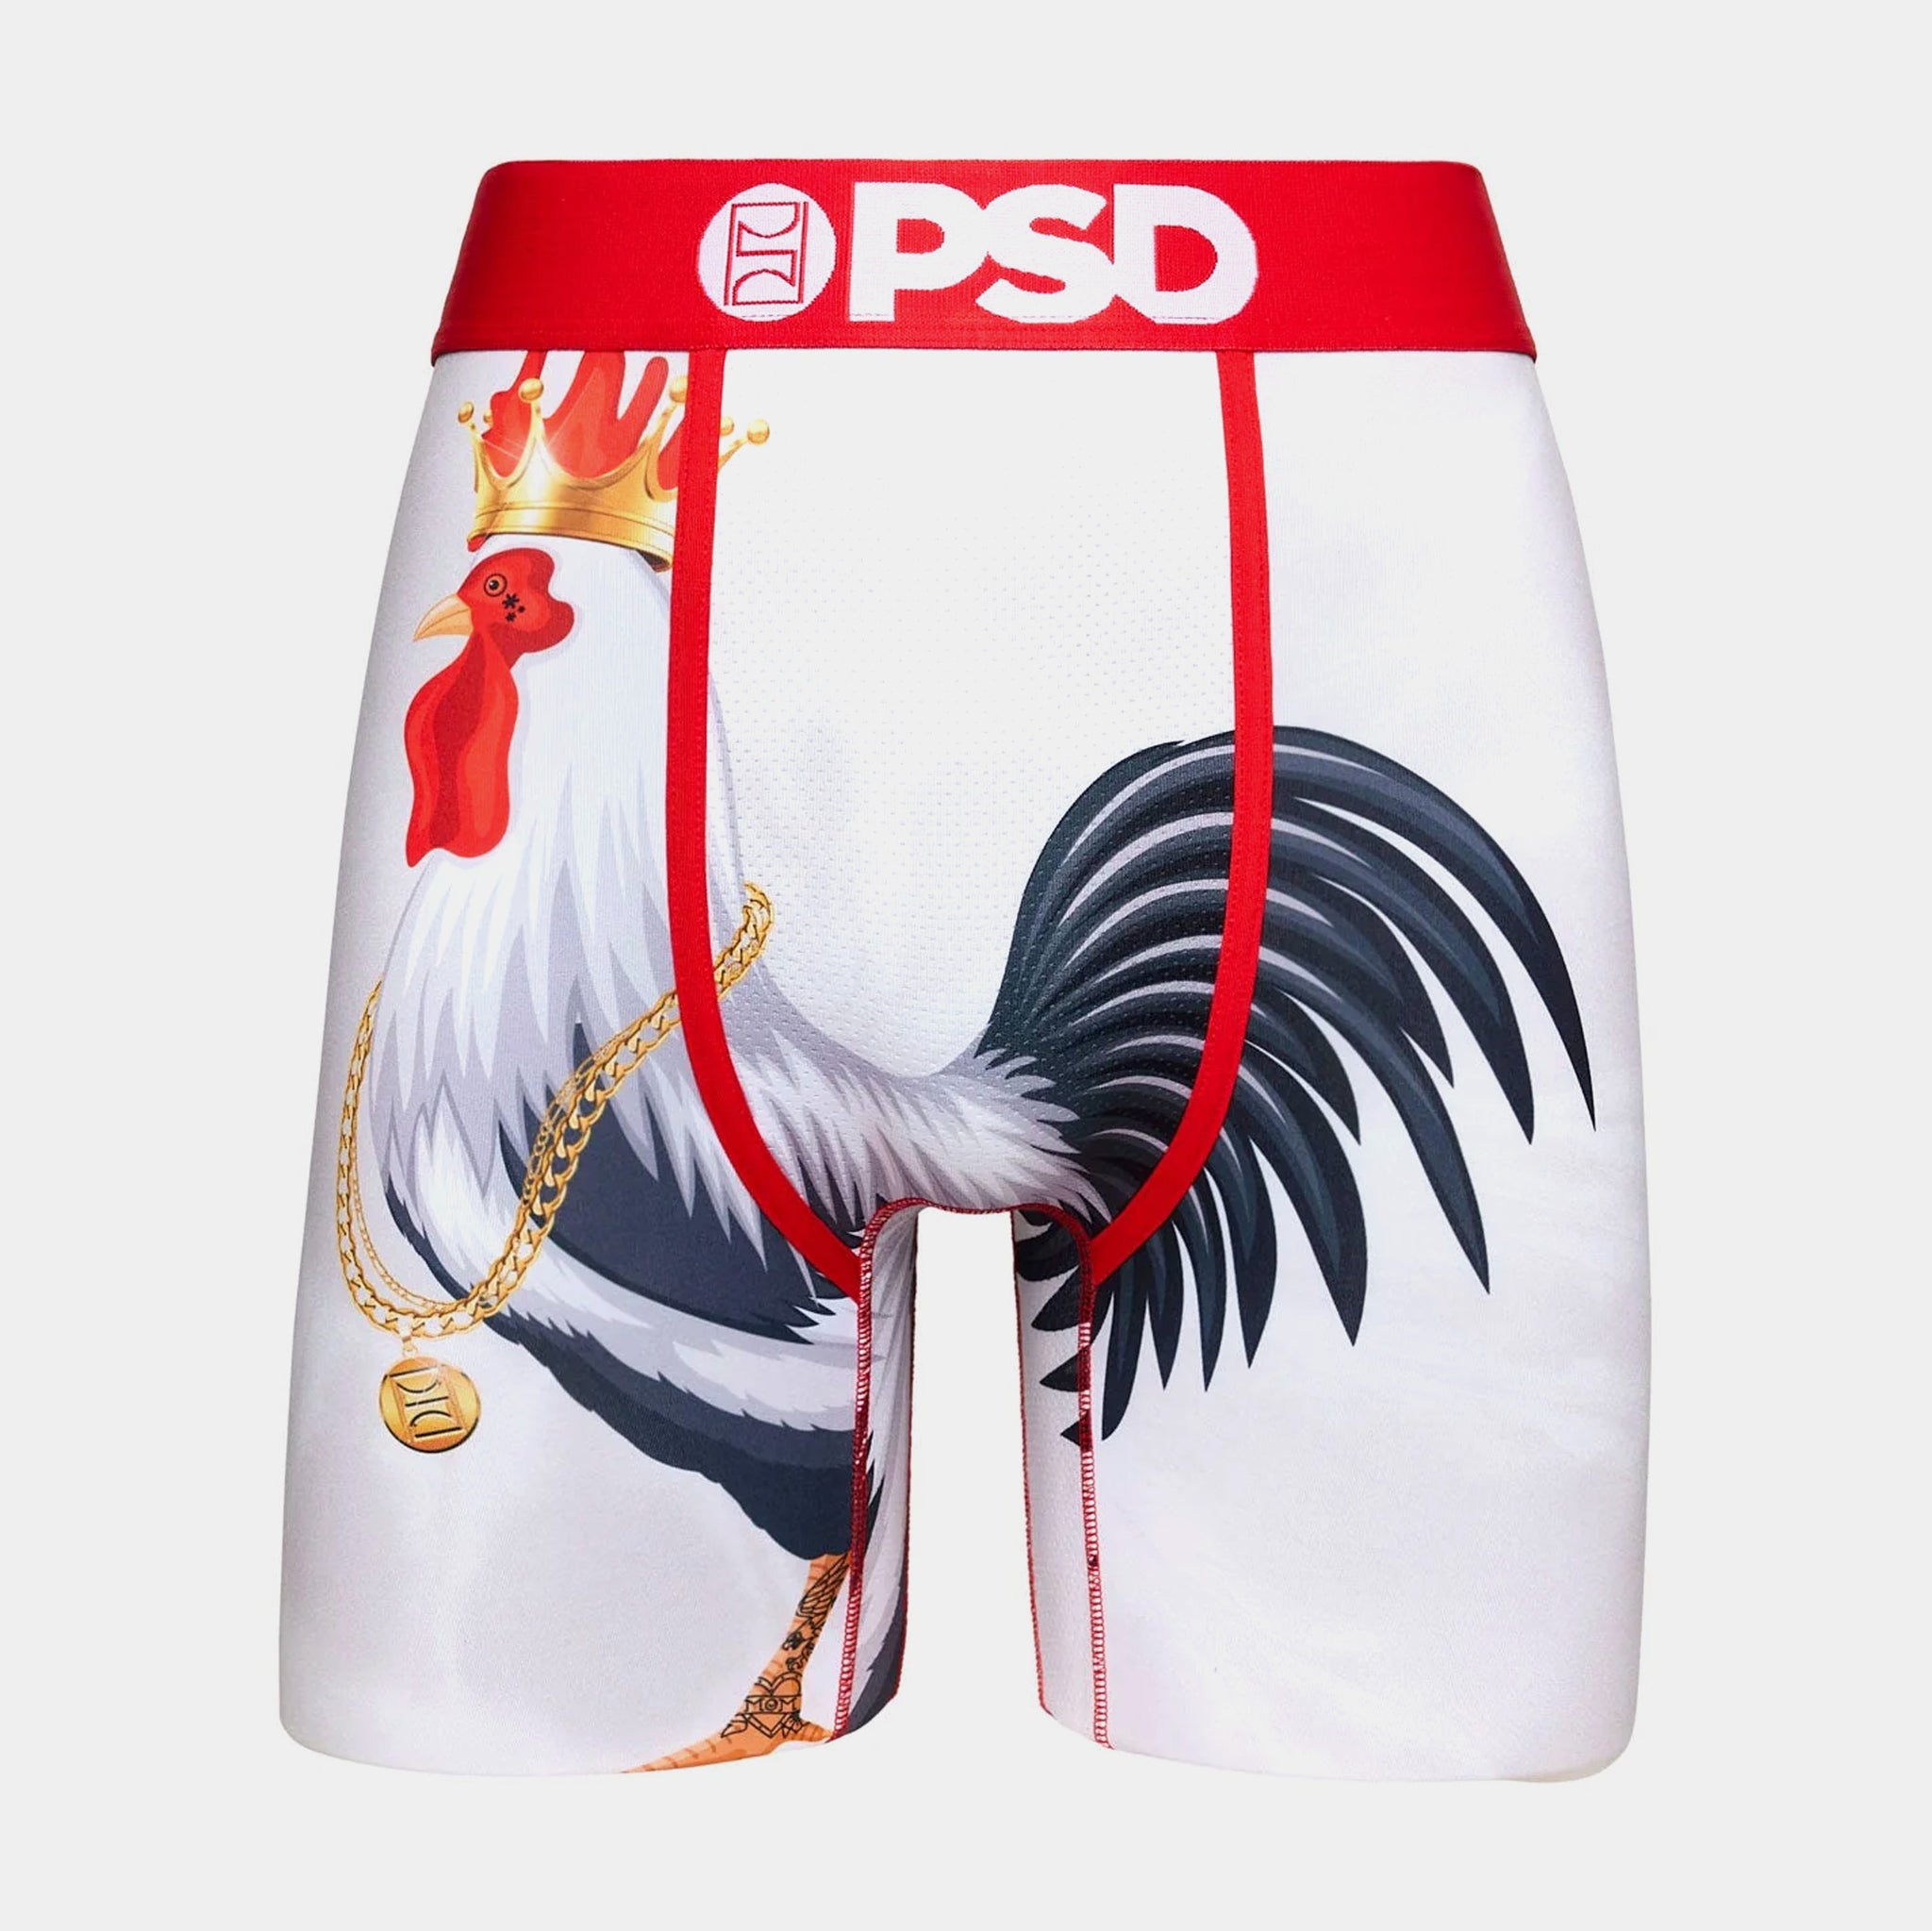 WATER DAISY Sports Bra - PSD Underwear